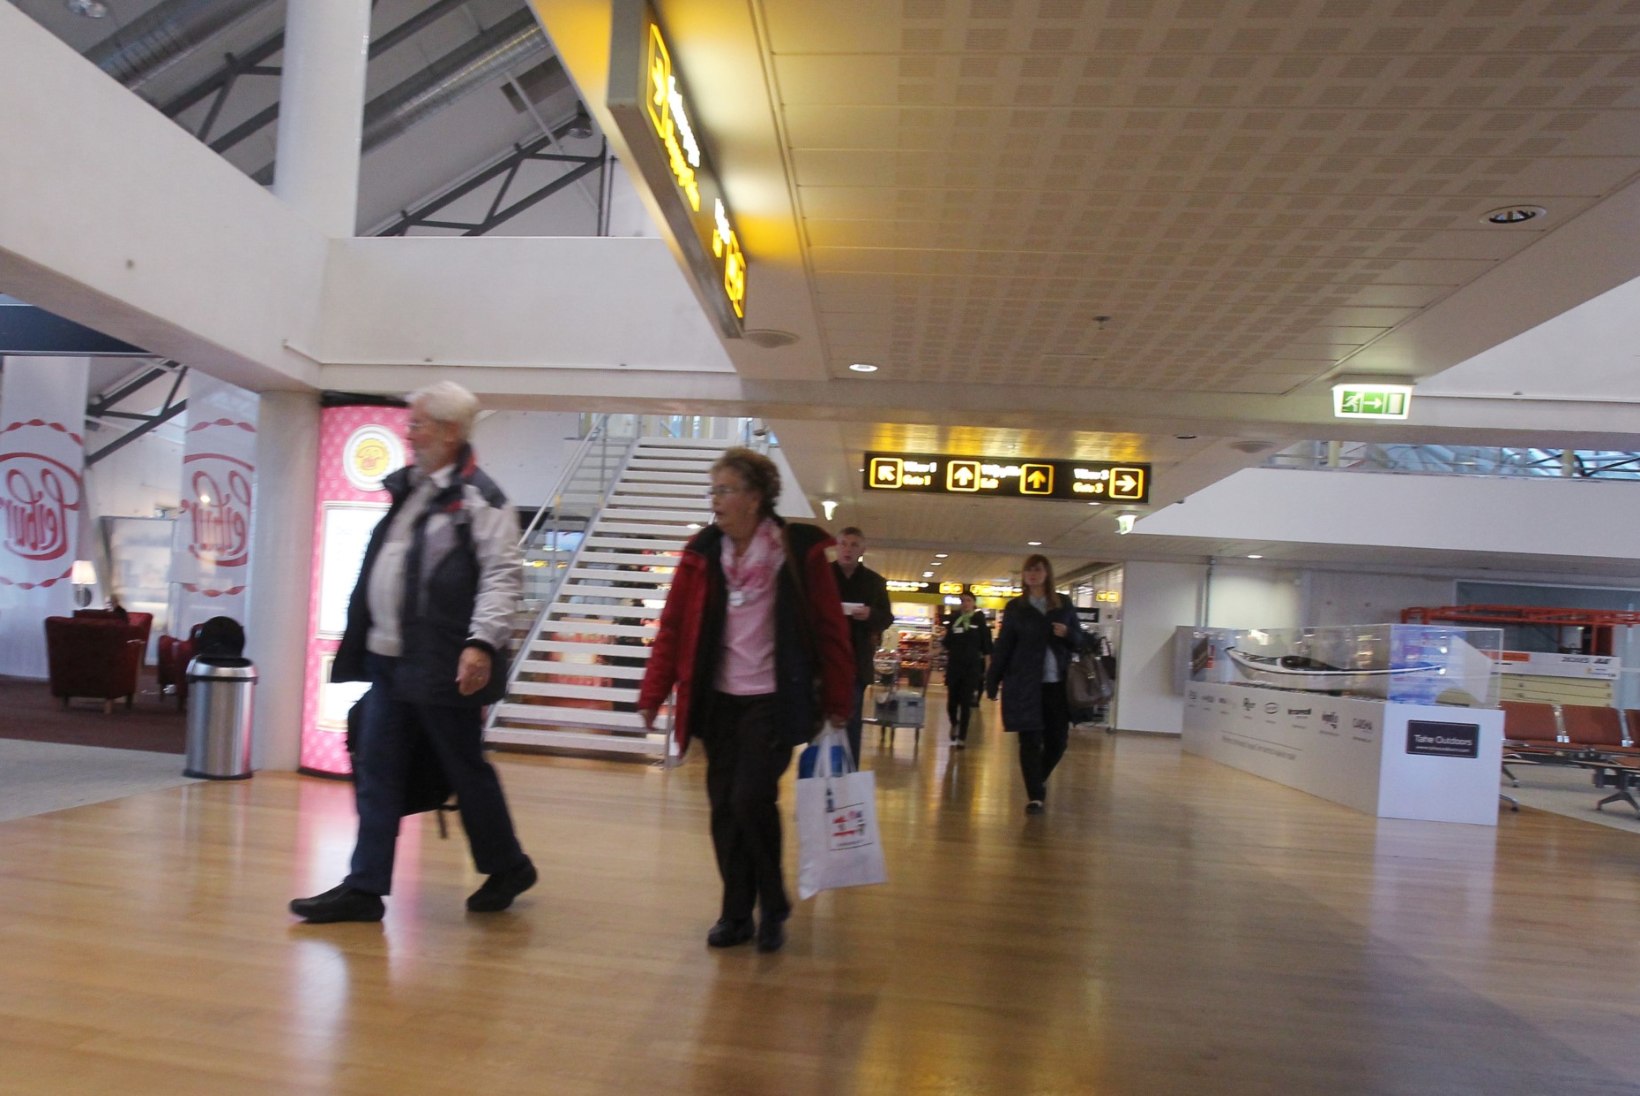 Tallinna lennujaamas saadeti piirilt tagasi kaks Ukraina kodanikku 